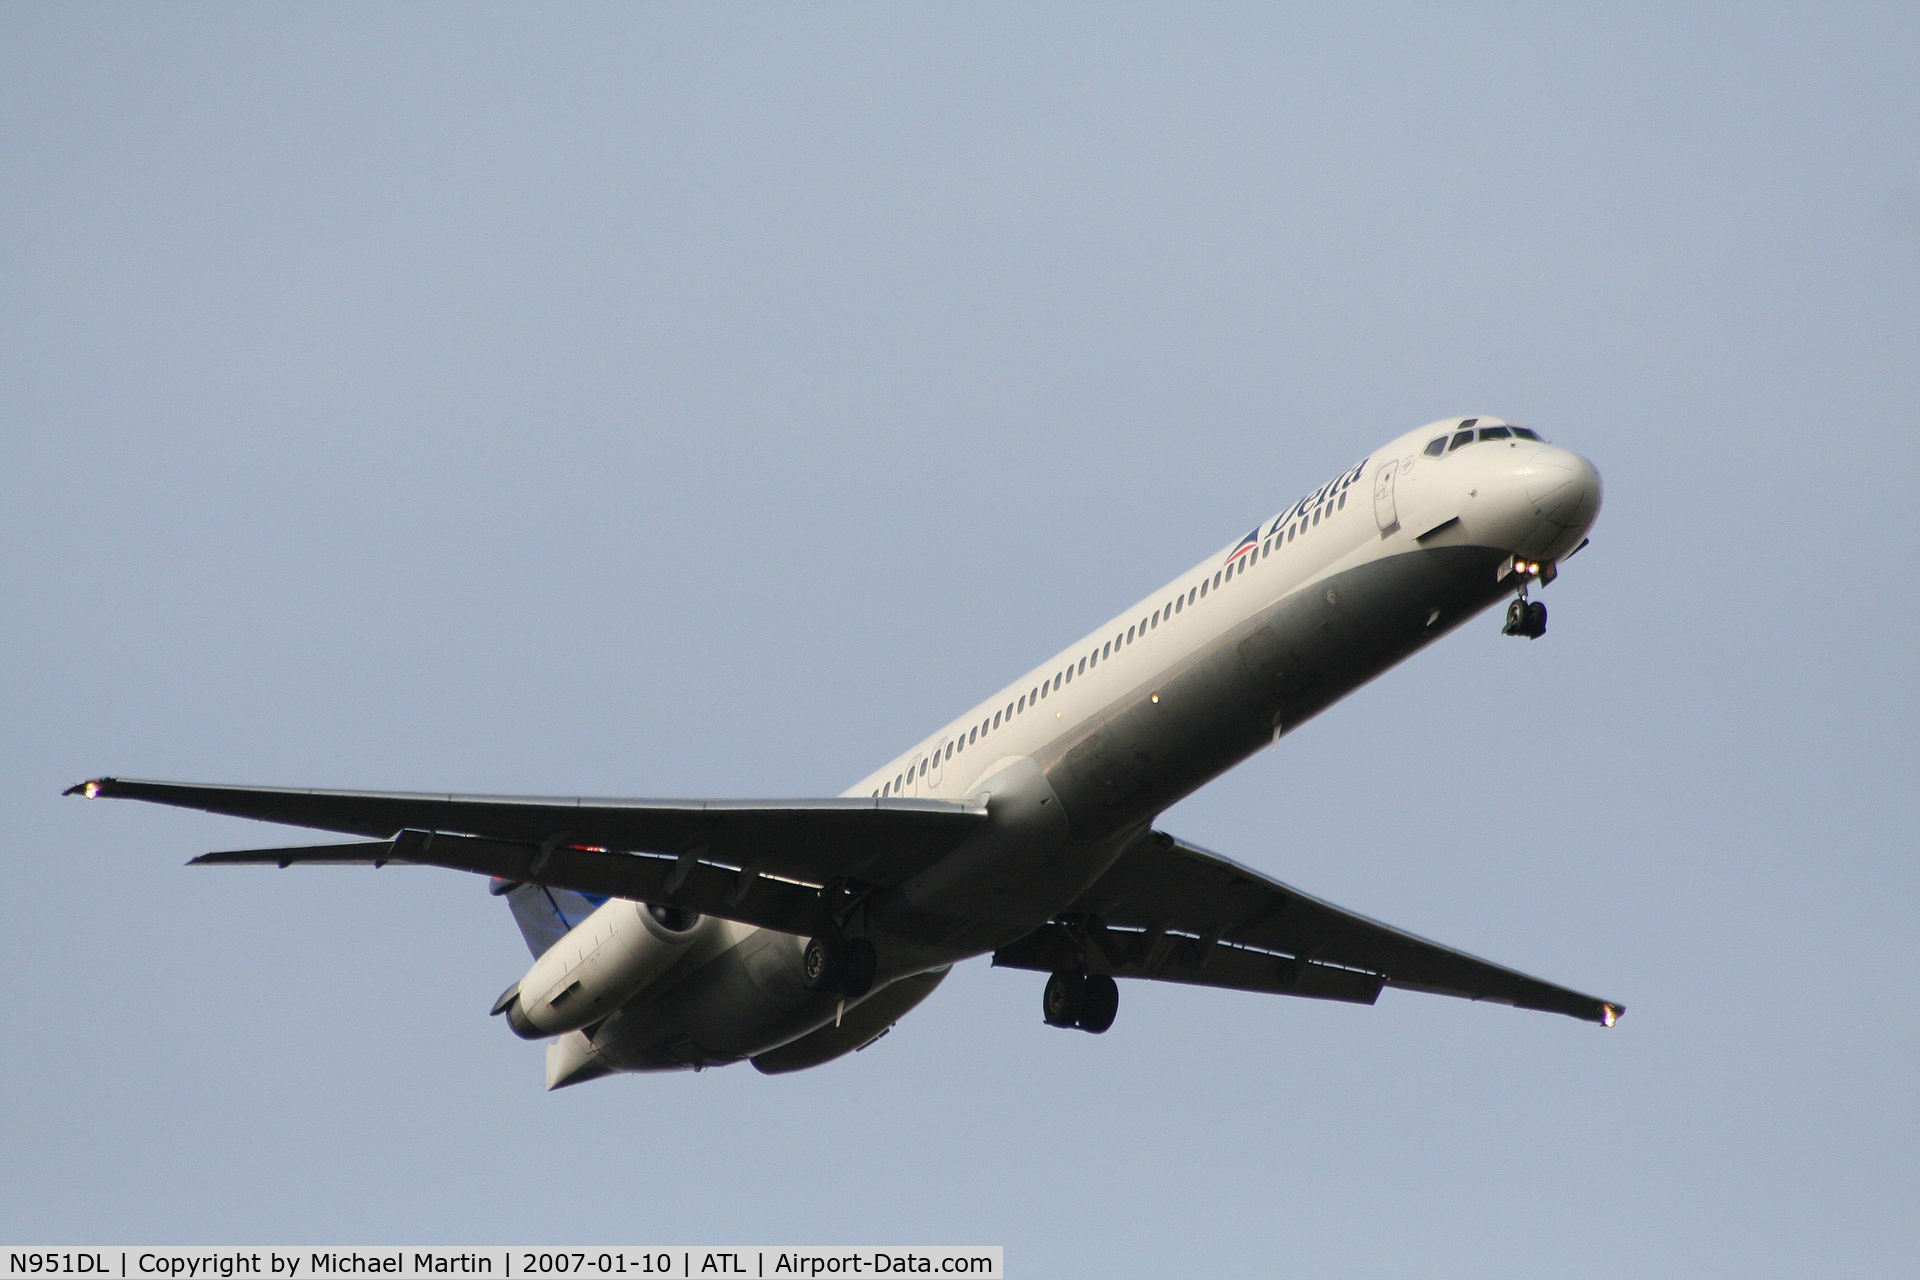 N951DL, 1990 McDonnell Douglas MD-88 C/N 49882, On final for Runway 9R